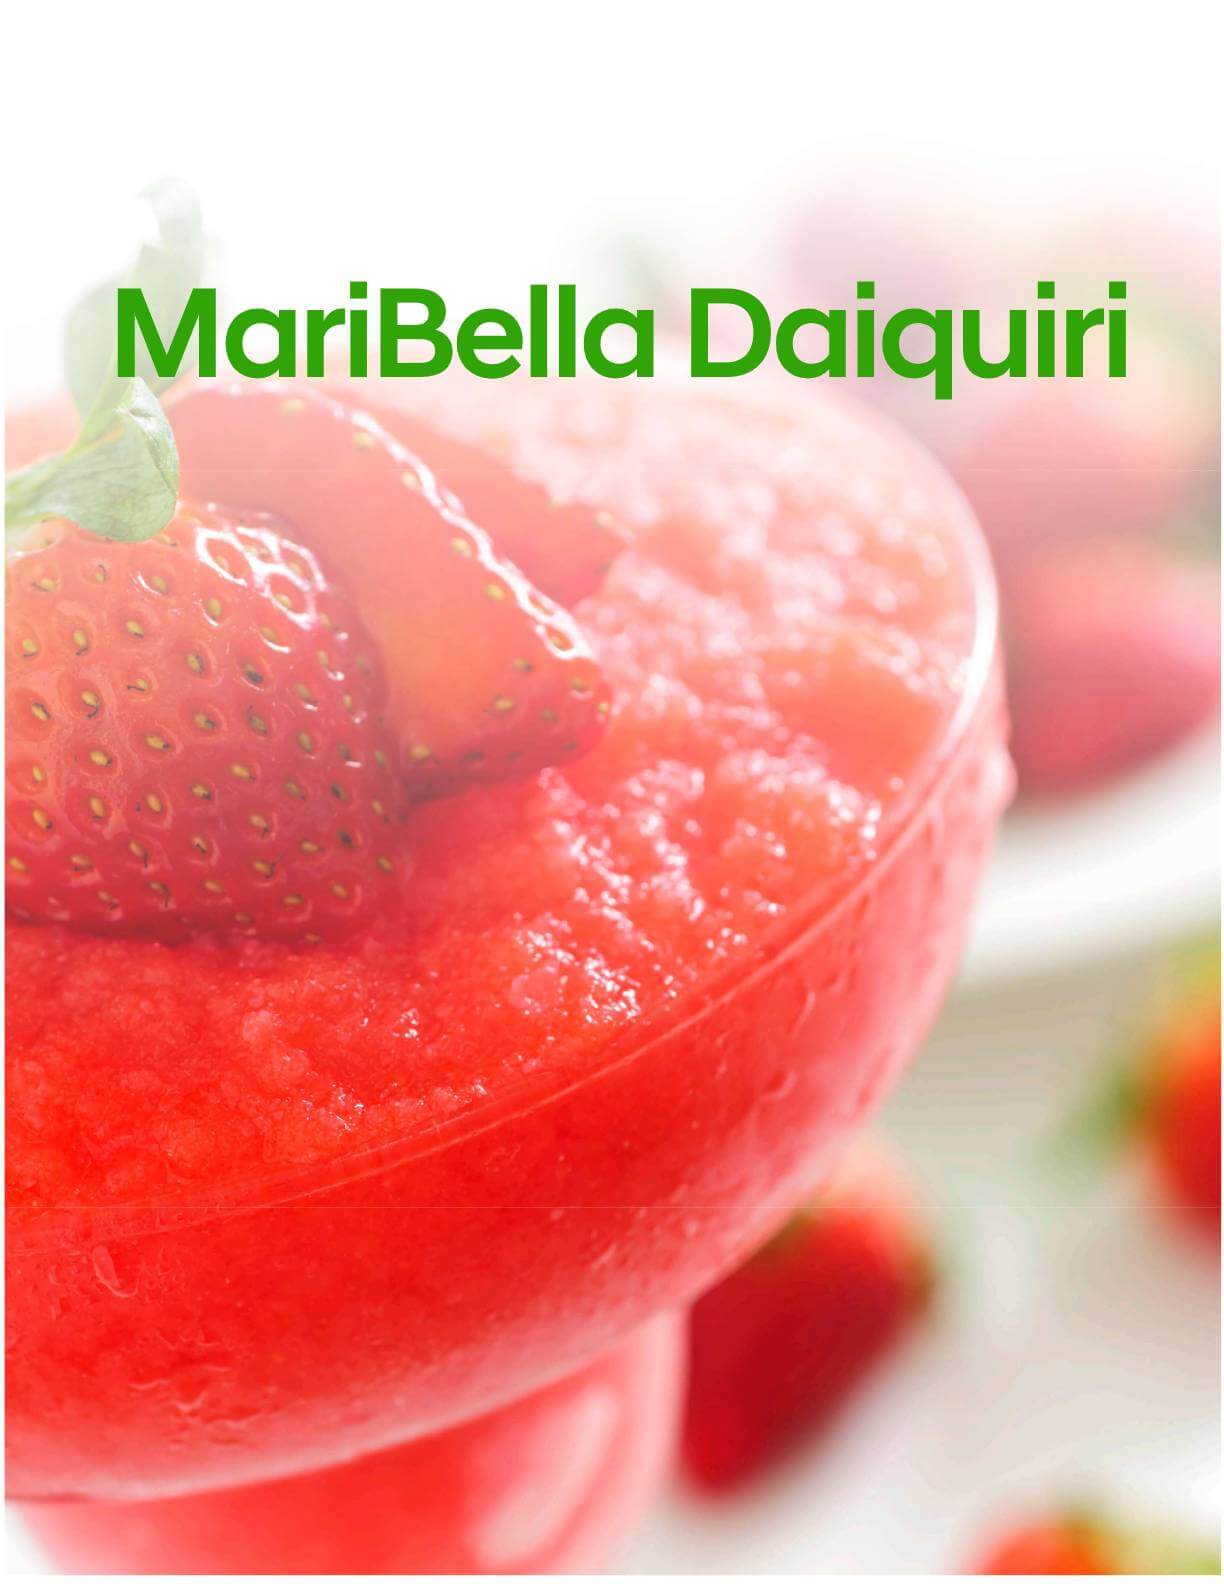 Food Truck Business Plan For MariBella Daiquiri